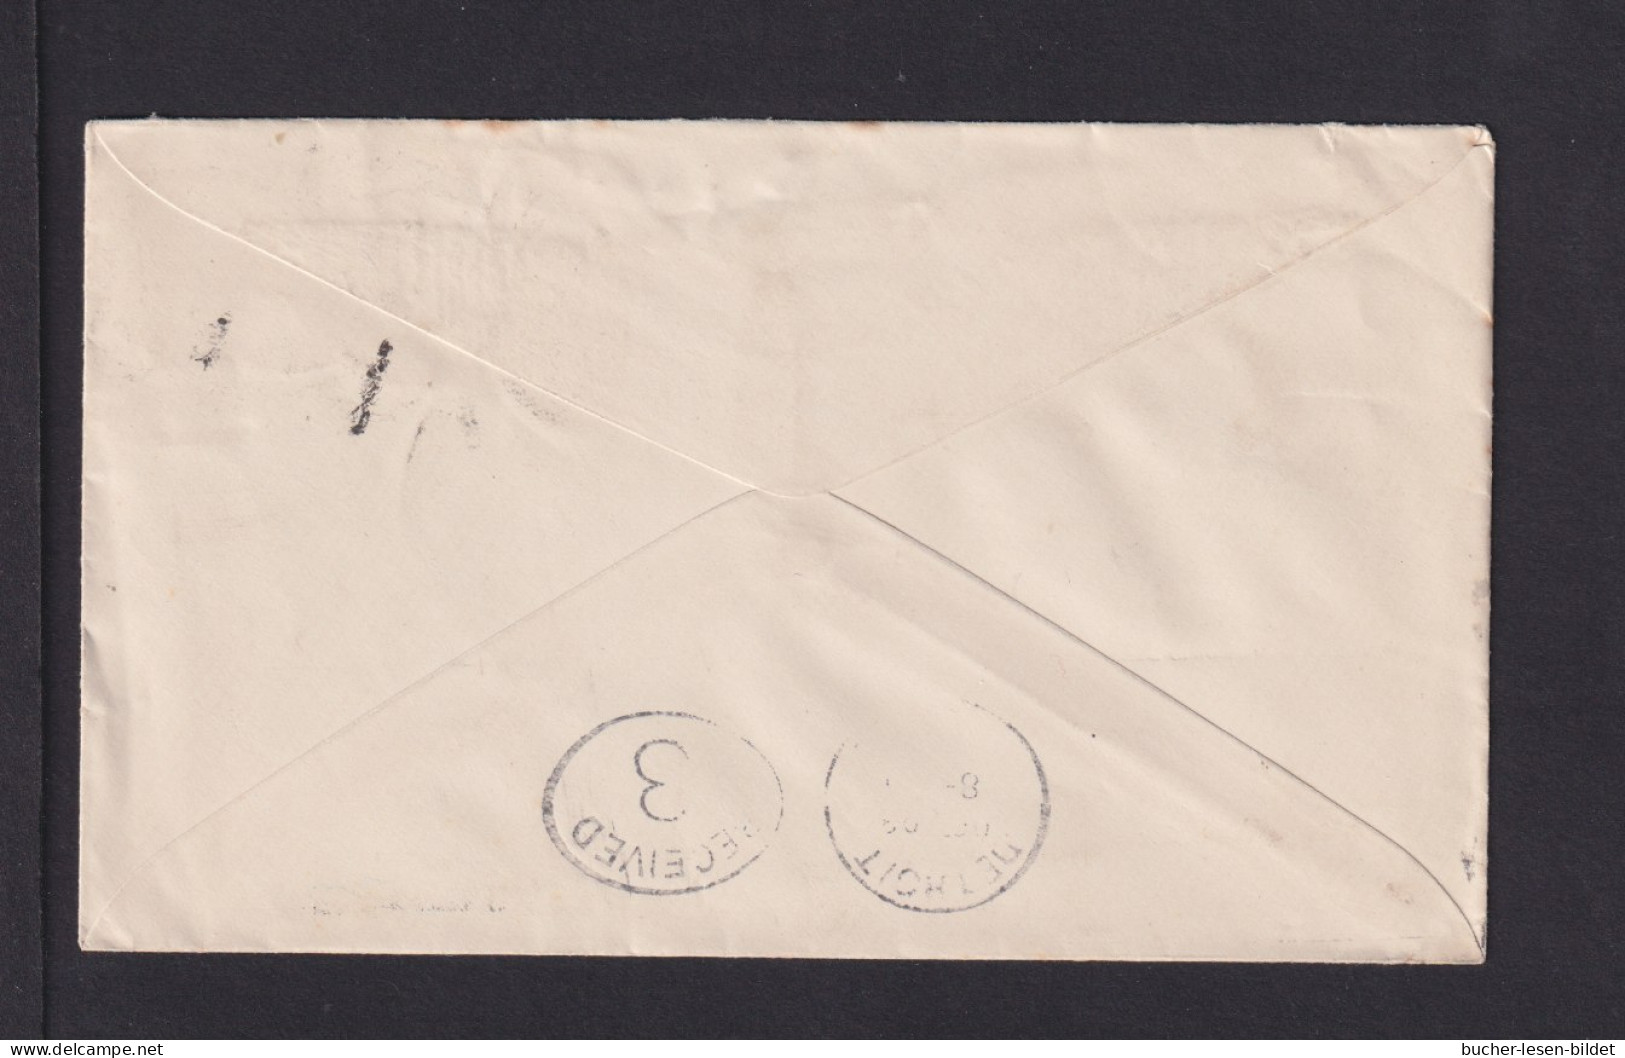 1900 - 2 C. Auf Brief Ab Ottawa Nach Detroit - Covers & Documents